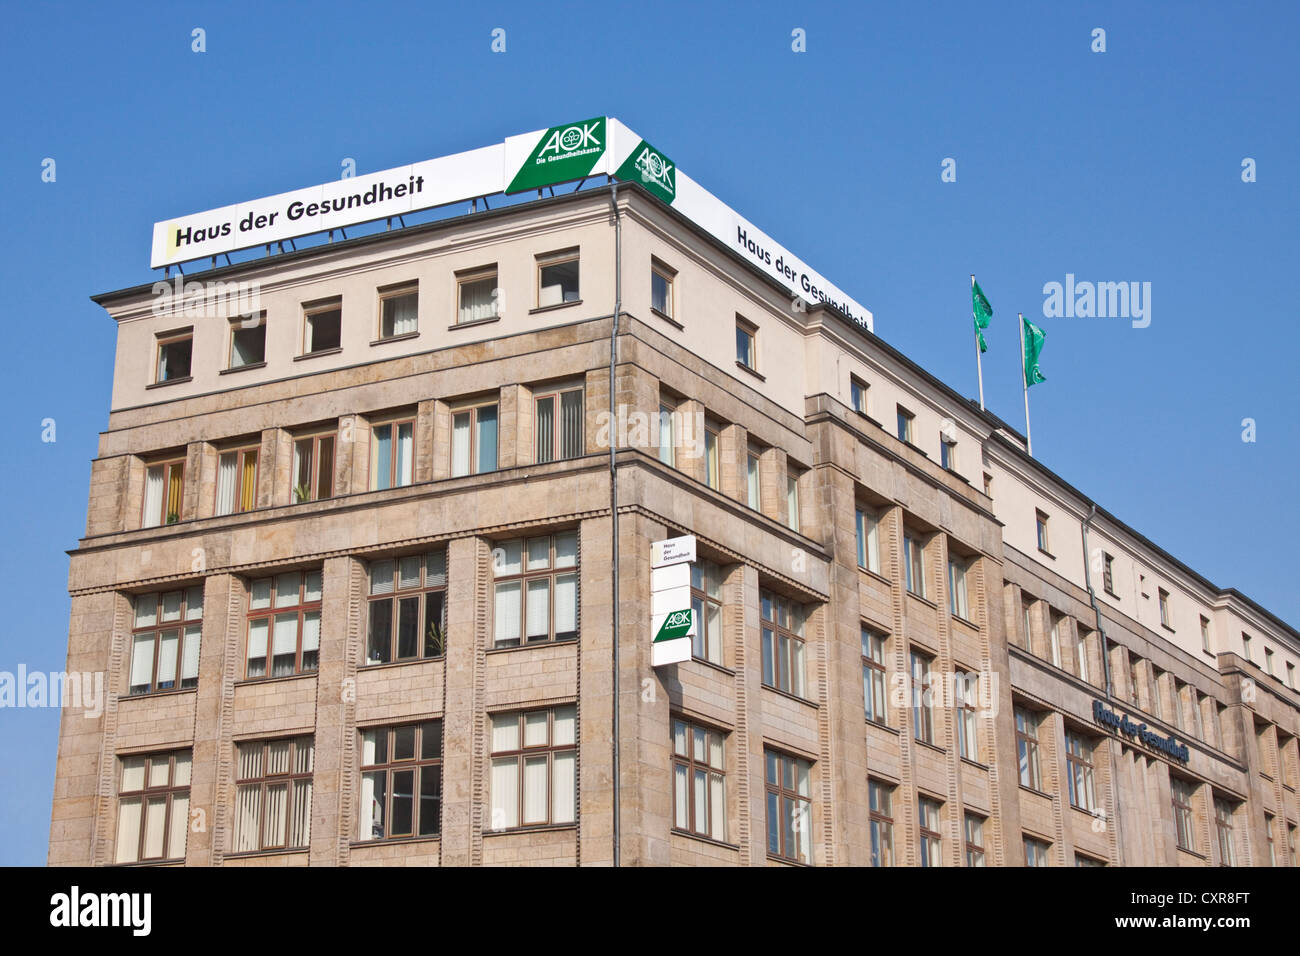 Haus der Gesundheit, House of Health, AOK health insurance company, Berlin, Germany, Europe Stock Photo